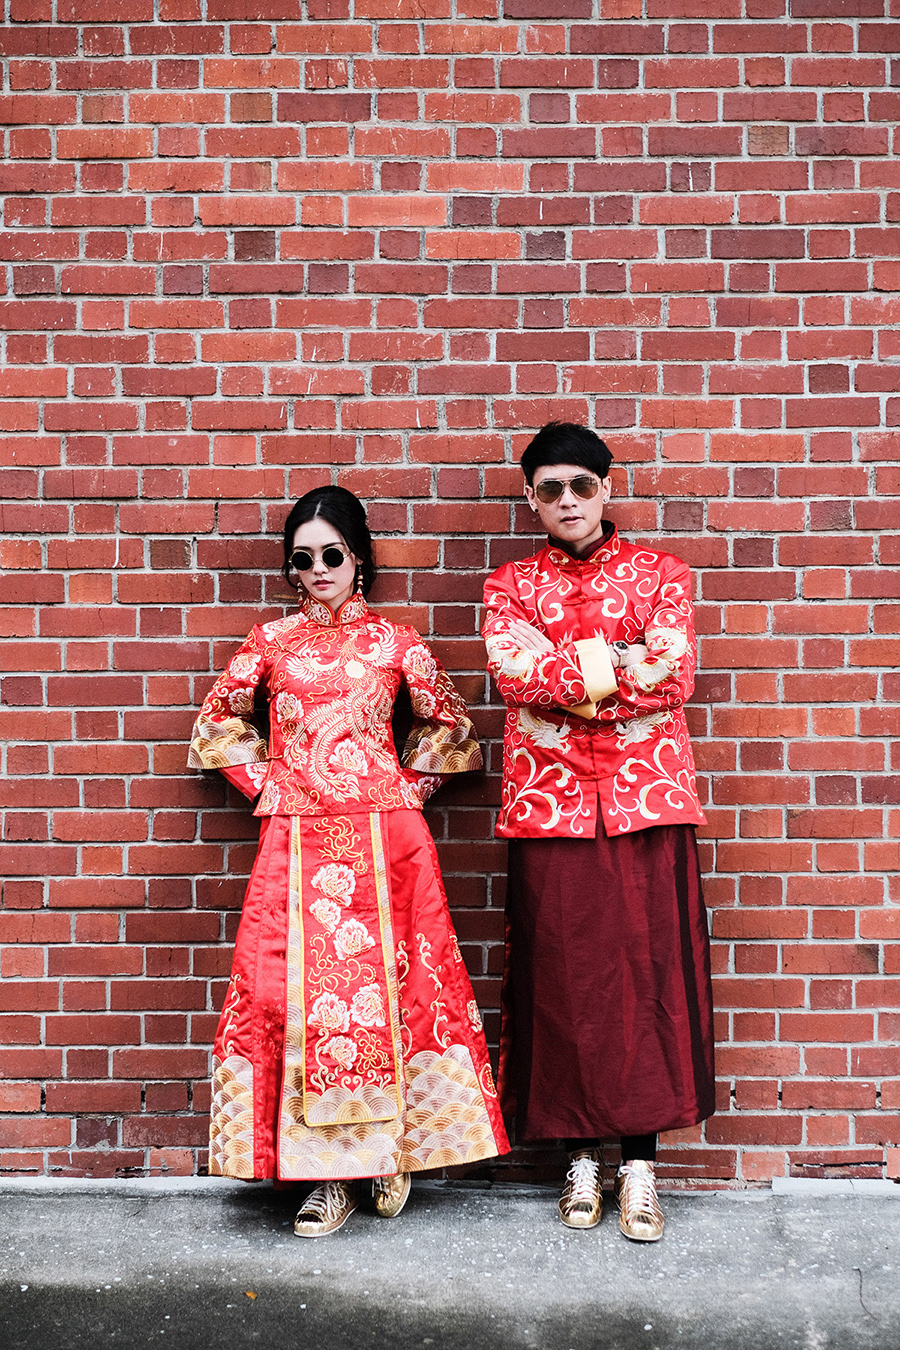 Why Chinese Brides Wear Red Dresses - Wedded Wonderland